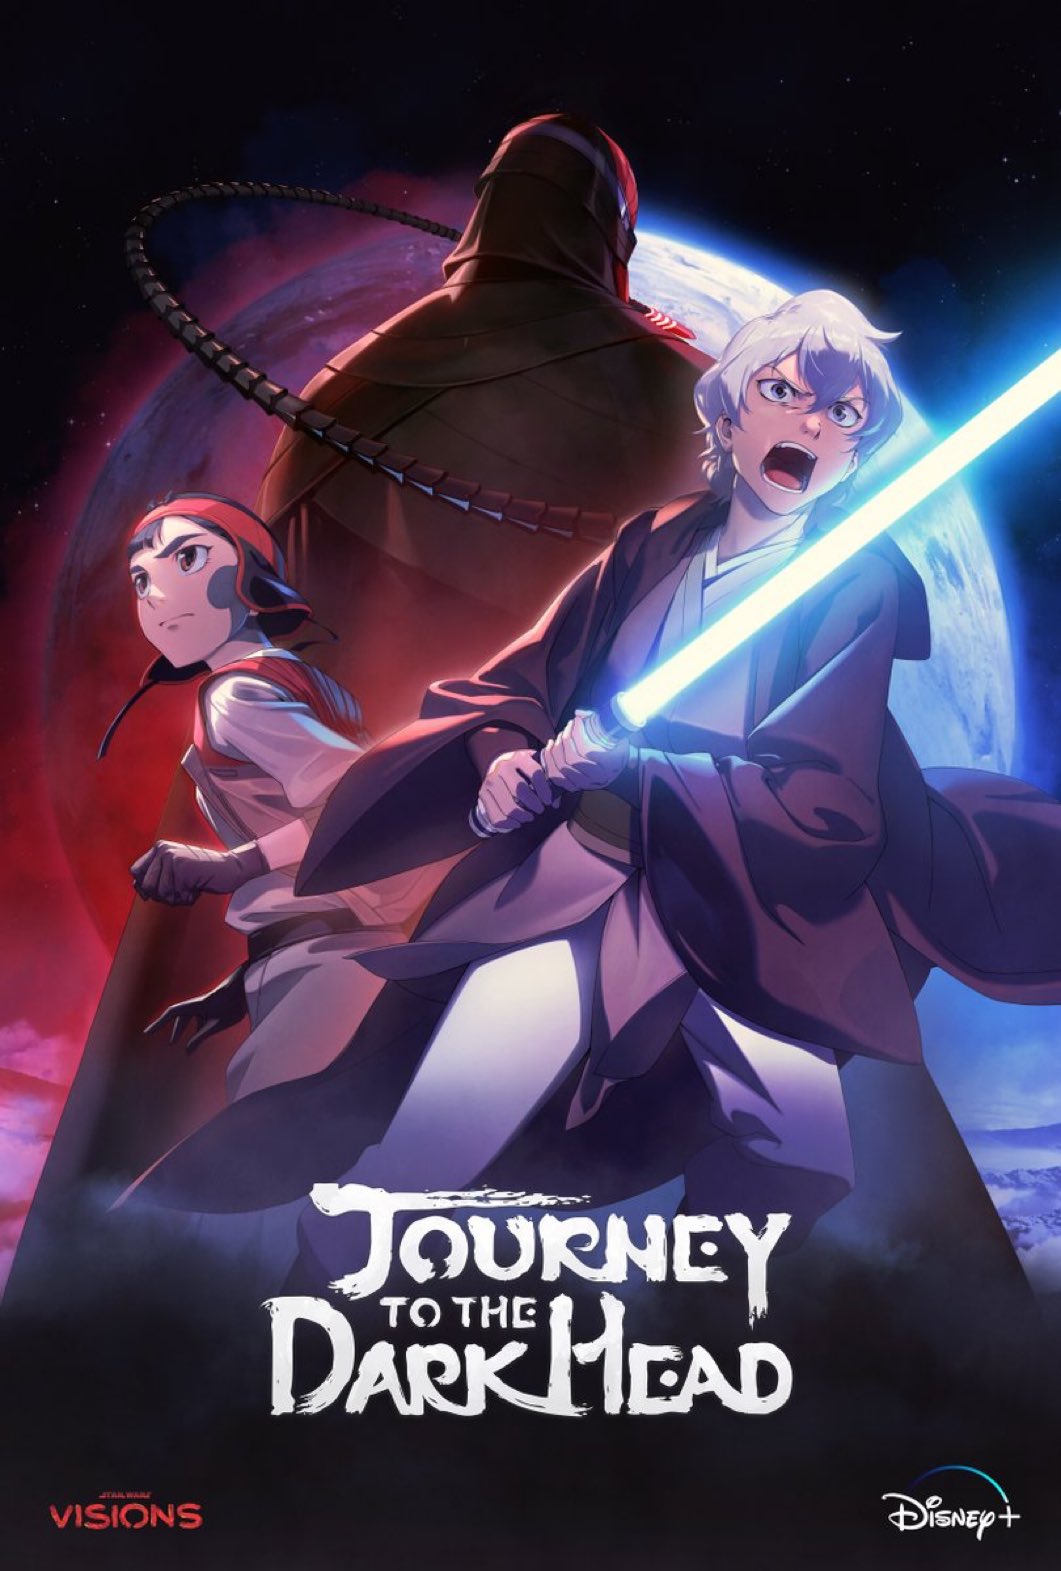 Cartoon Base on Twitter: "First poster for 'Star Wars: Visions' Volume 2 short film 'JOURNEY TO THE DARKHEAD'. https://t.co/nKl5ceuGxR" / Twitter